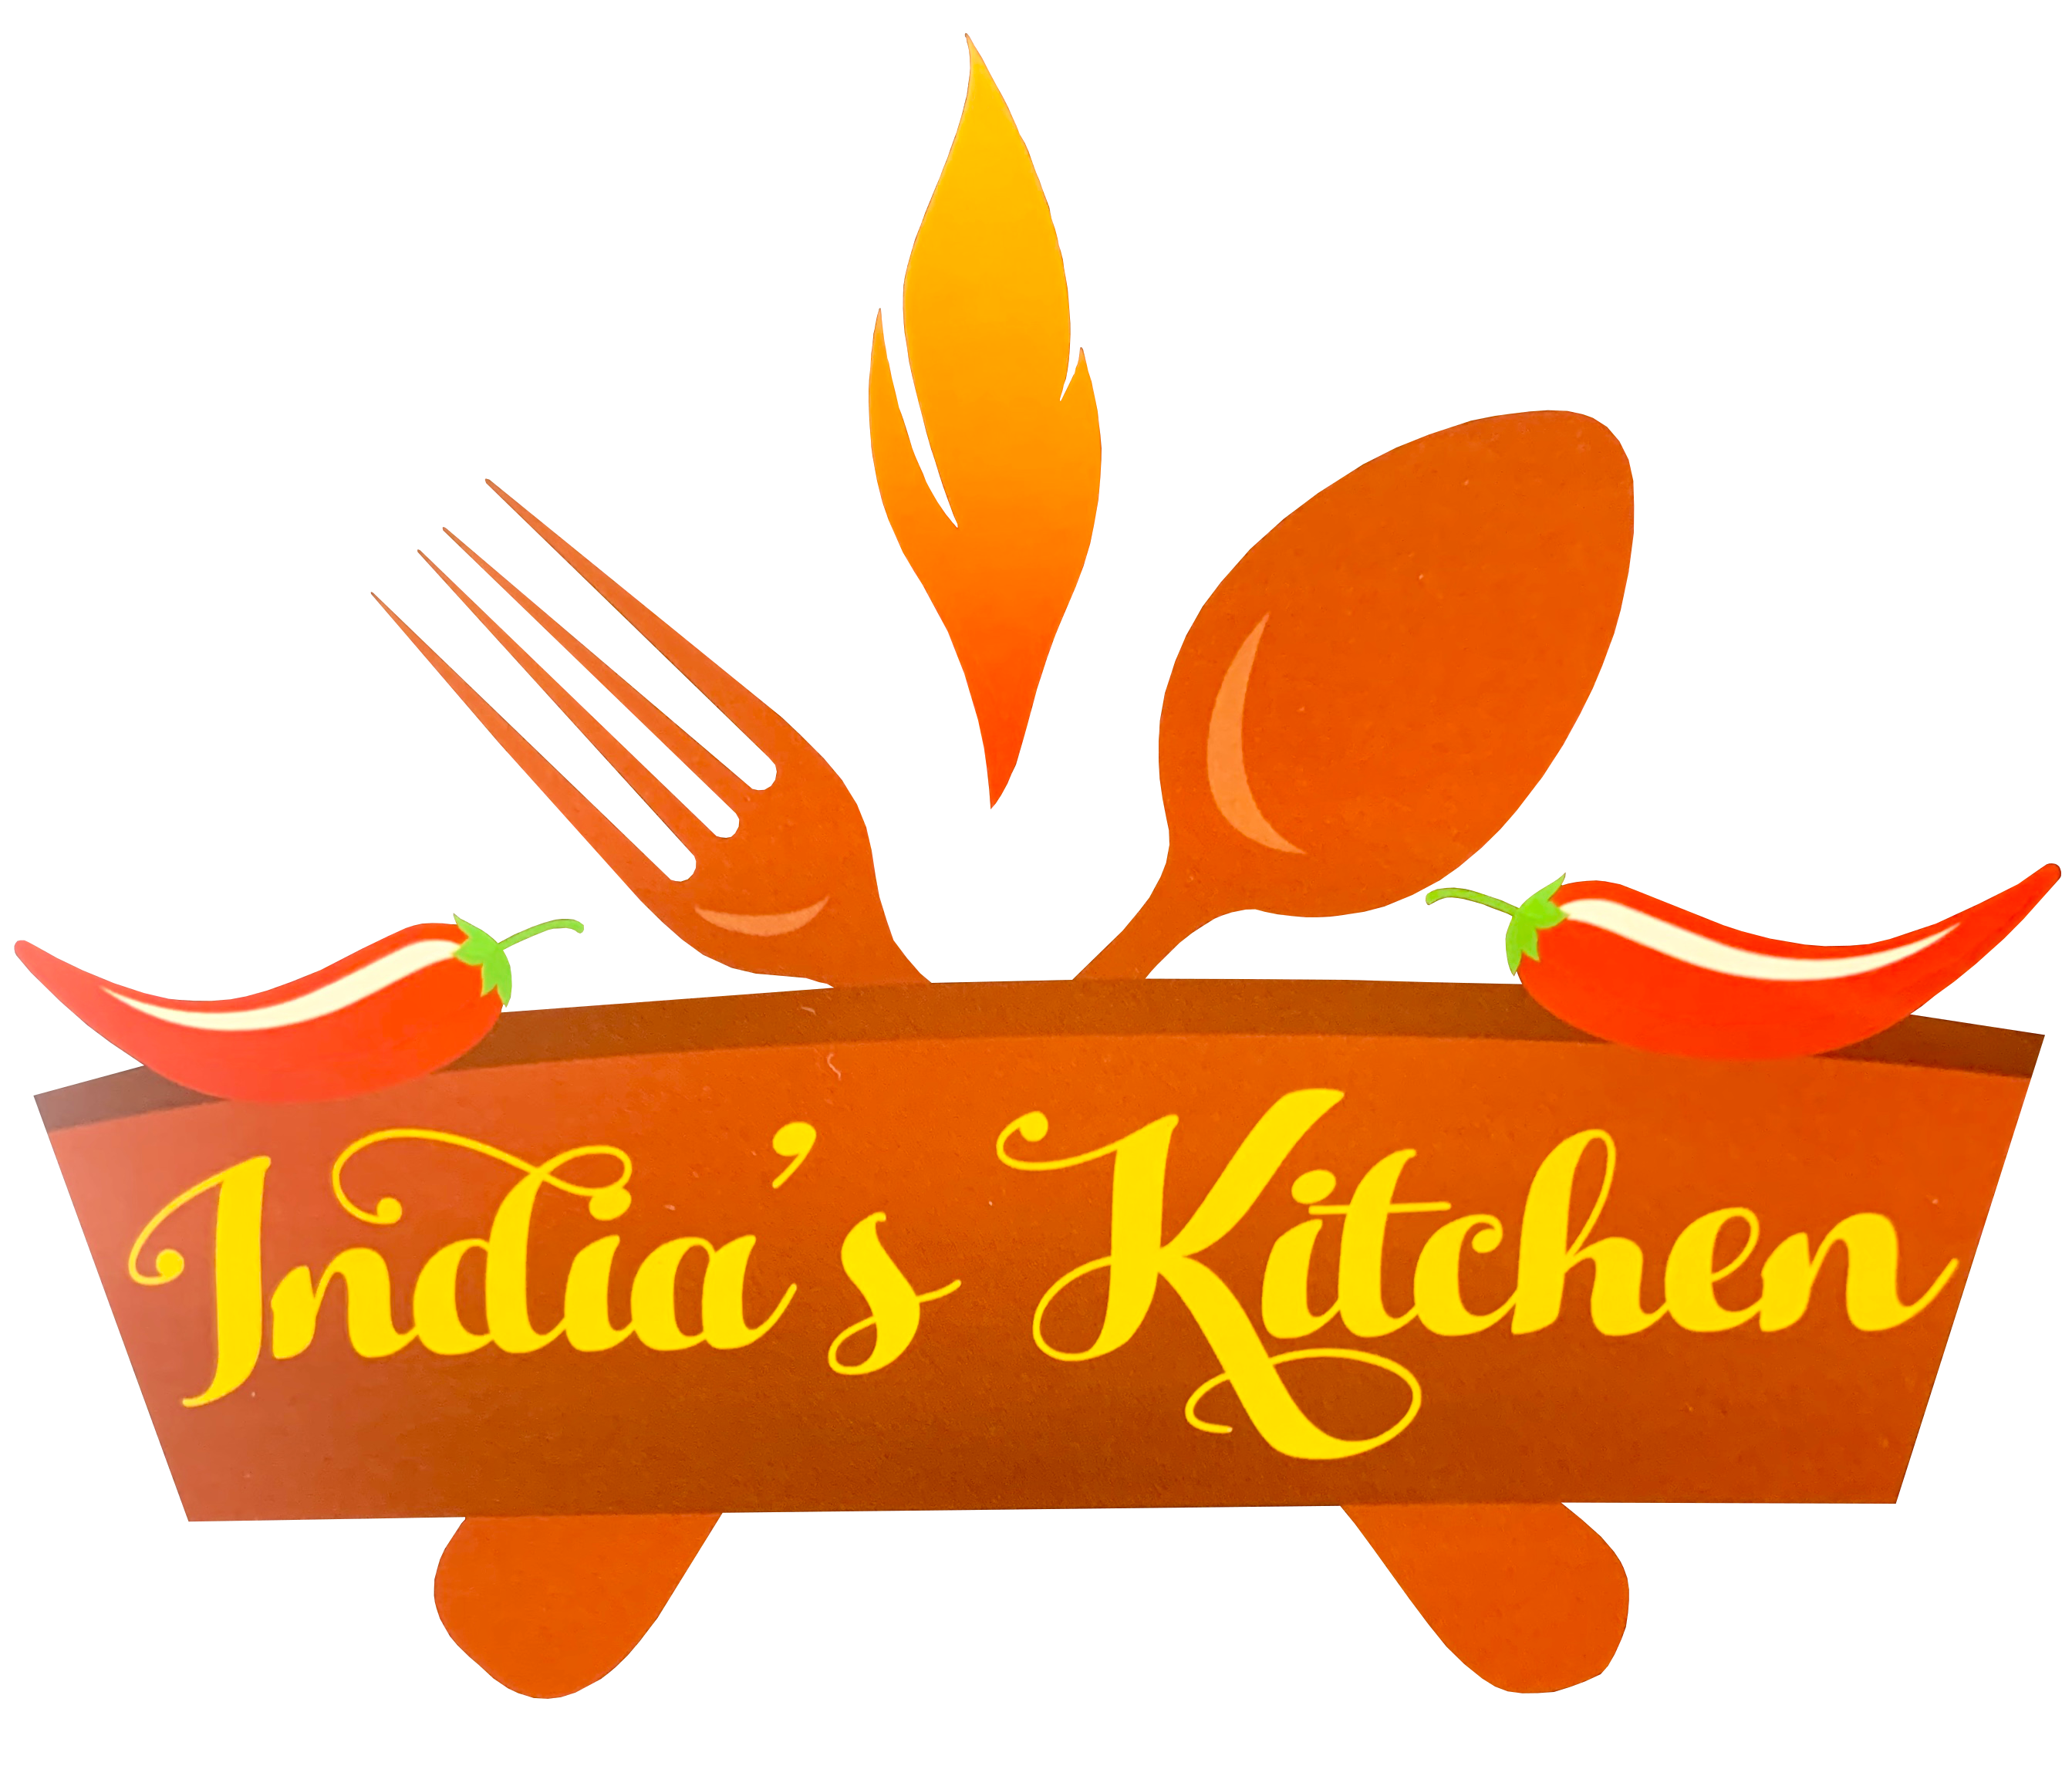 India's kitchen logo